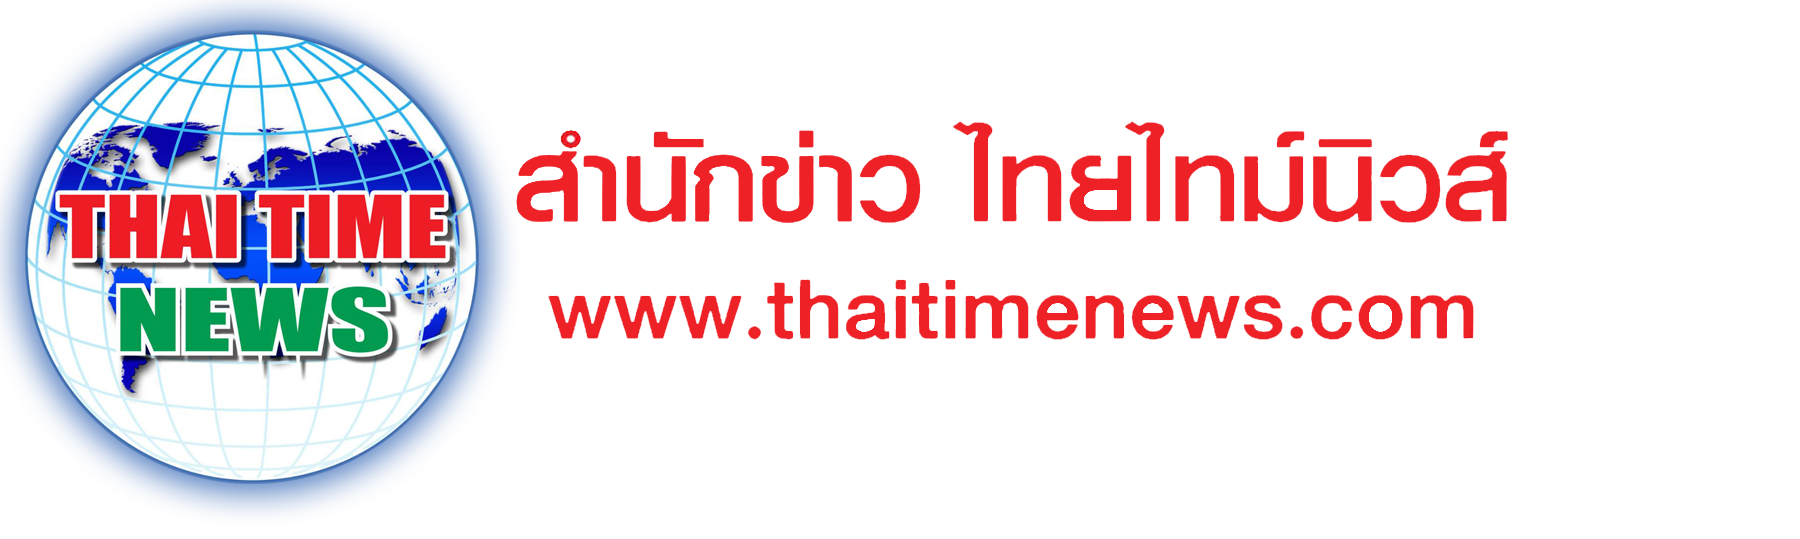 ThaitimeNews_Logo